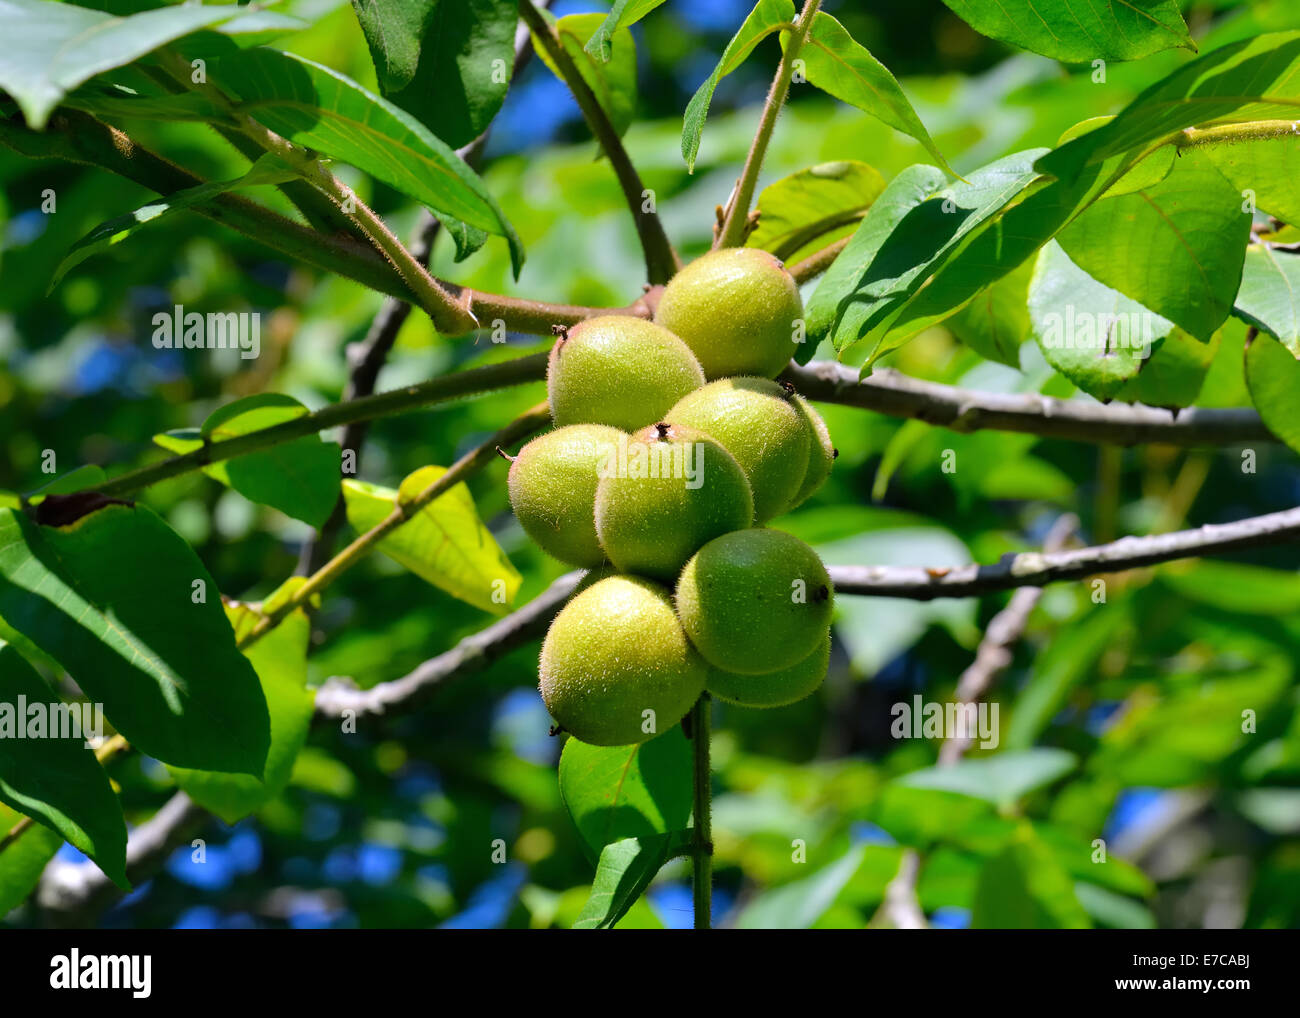 Juglans Cordiformis - green nuts on a tree branch Stock Photo